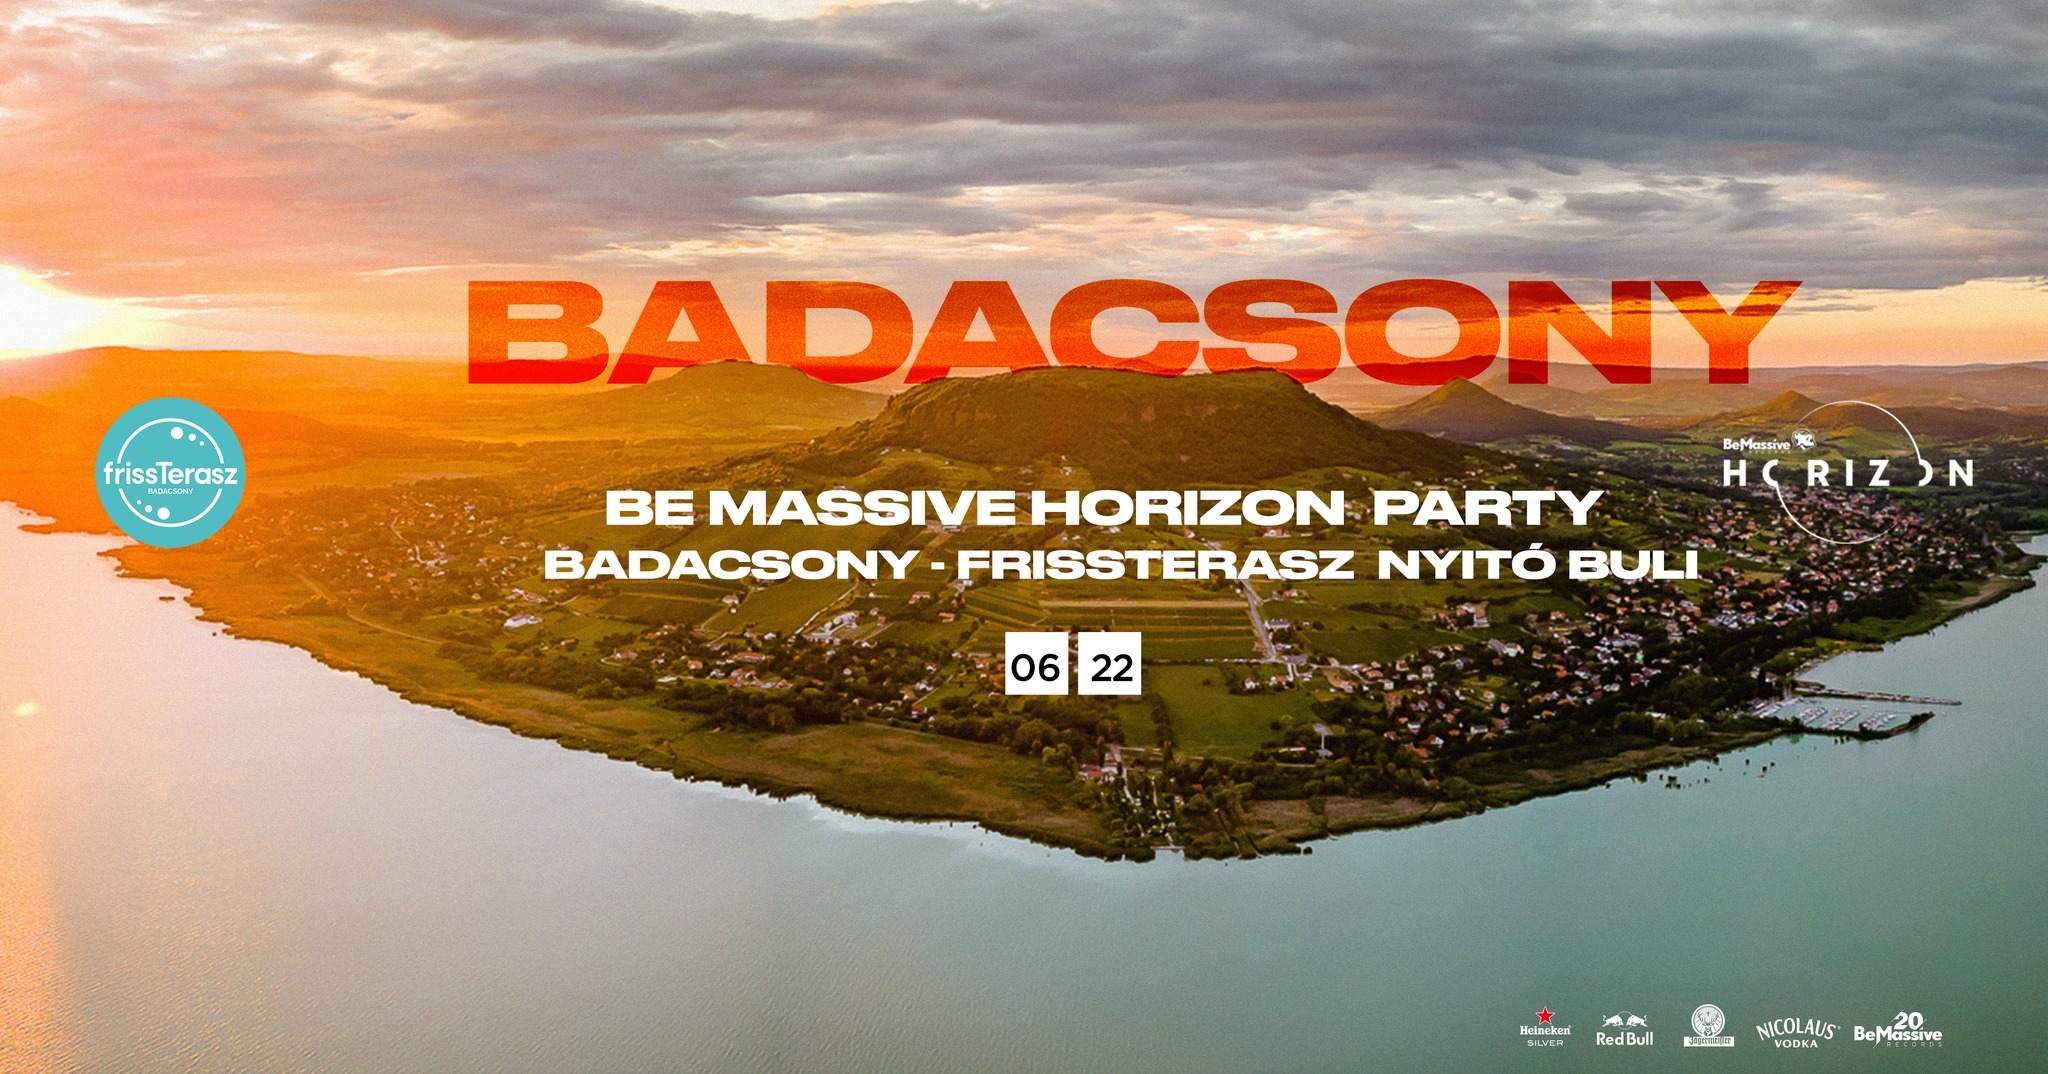 Be Massive Horizon Party Badacsony - Frissterasz Nyitóbuli - フライヤー表